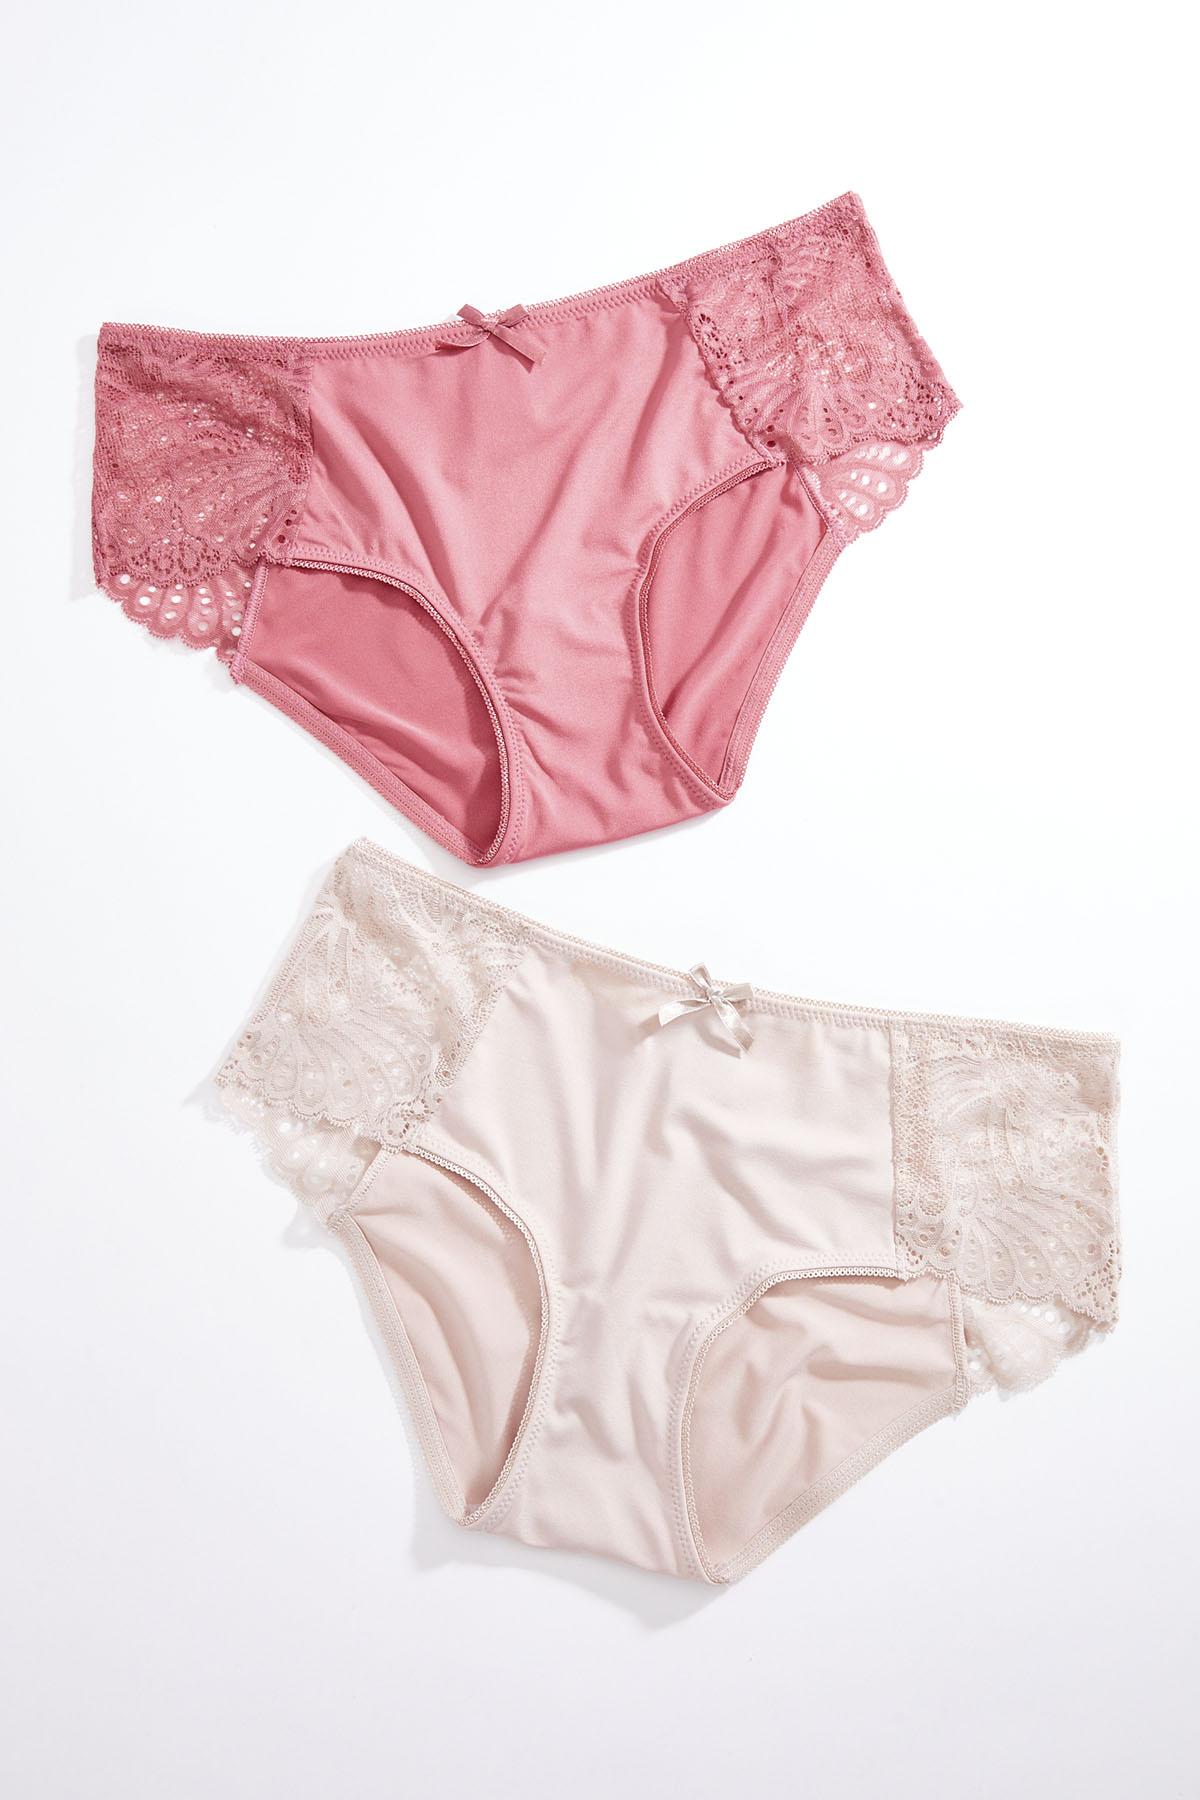 Neutral Pink Panty Set